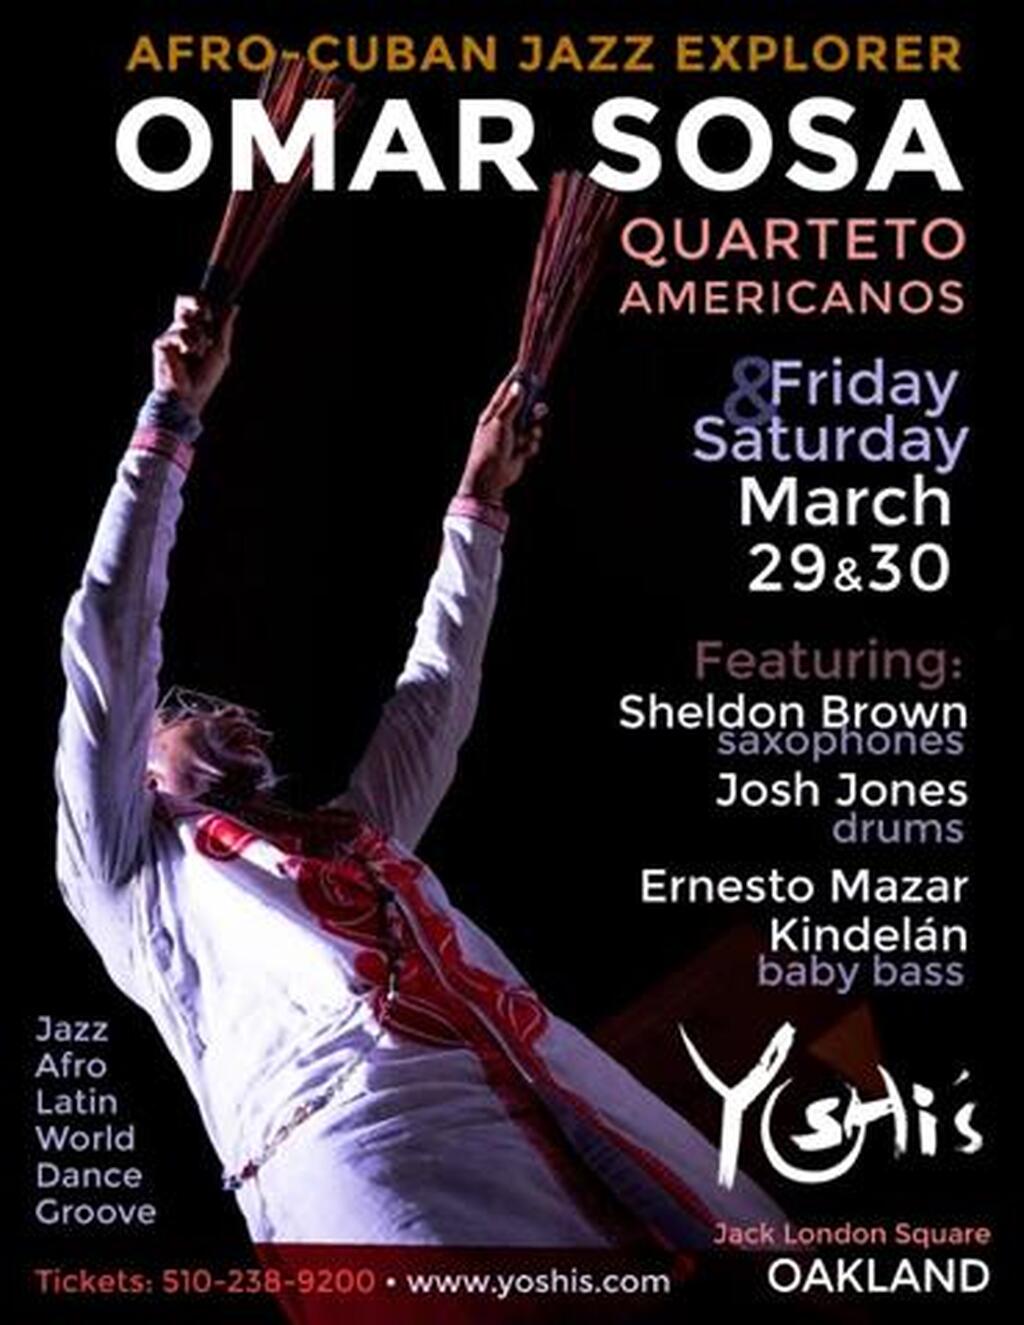 Yoshi s Join Us for a Night of Afro Cuban Jazz with Omar Sosa Quarteto Americanos promotion flier on Digifli com